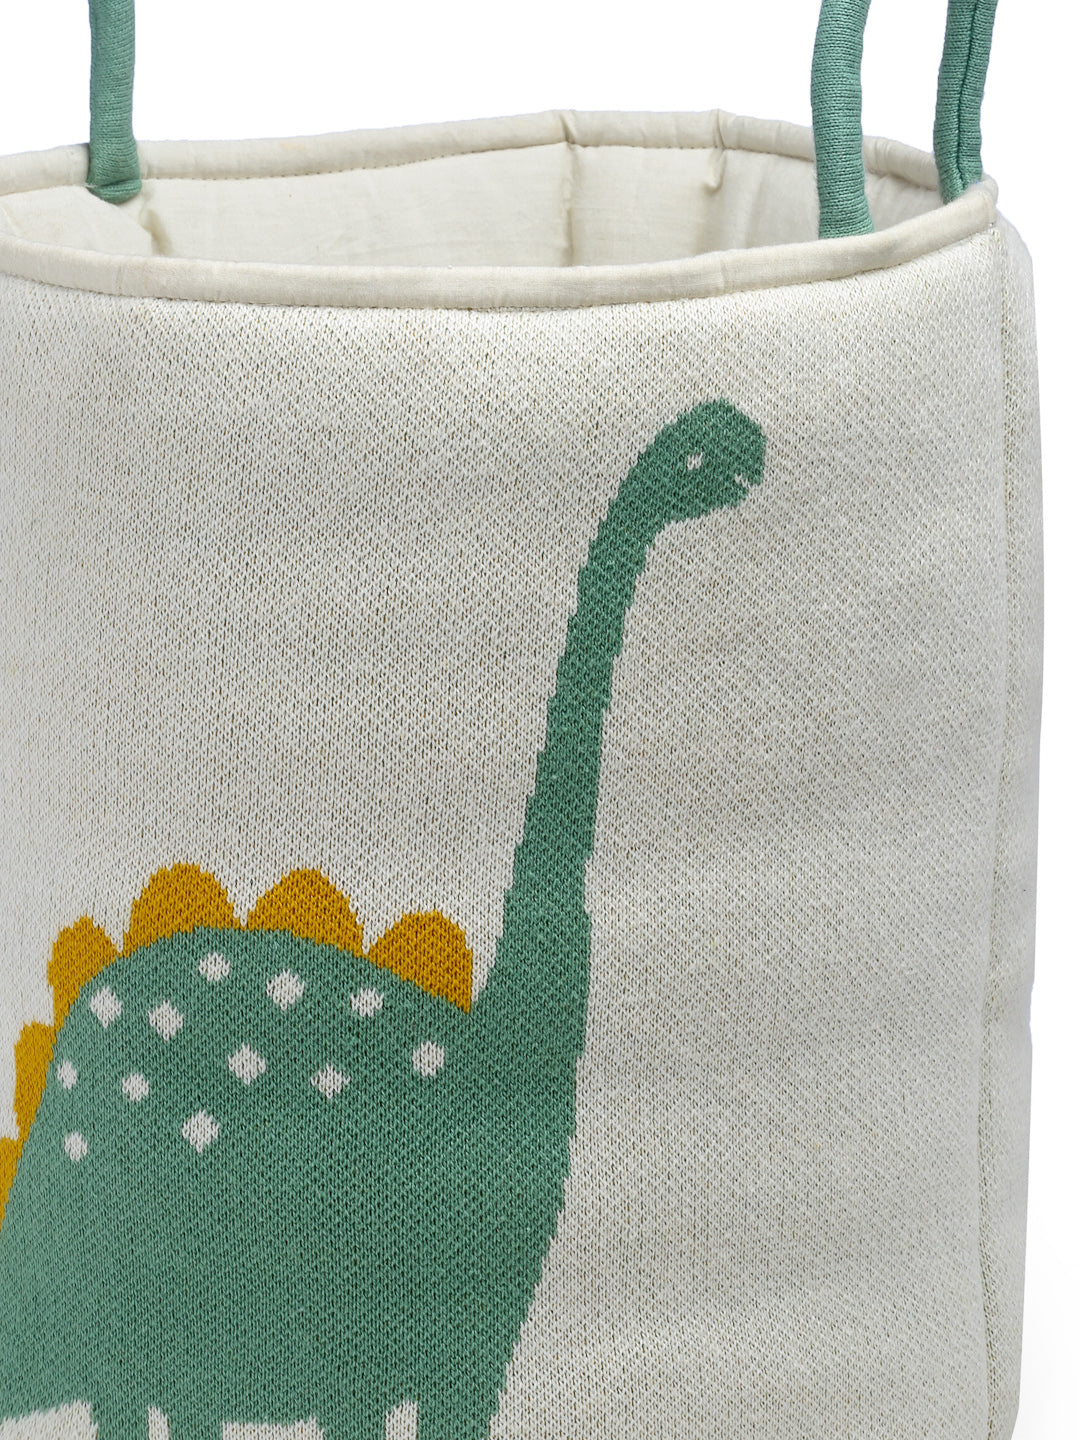 Dinosaur Knitted Basket